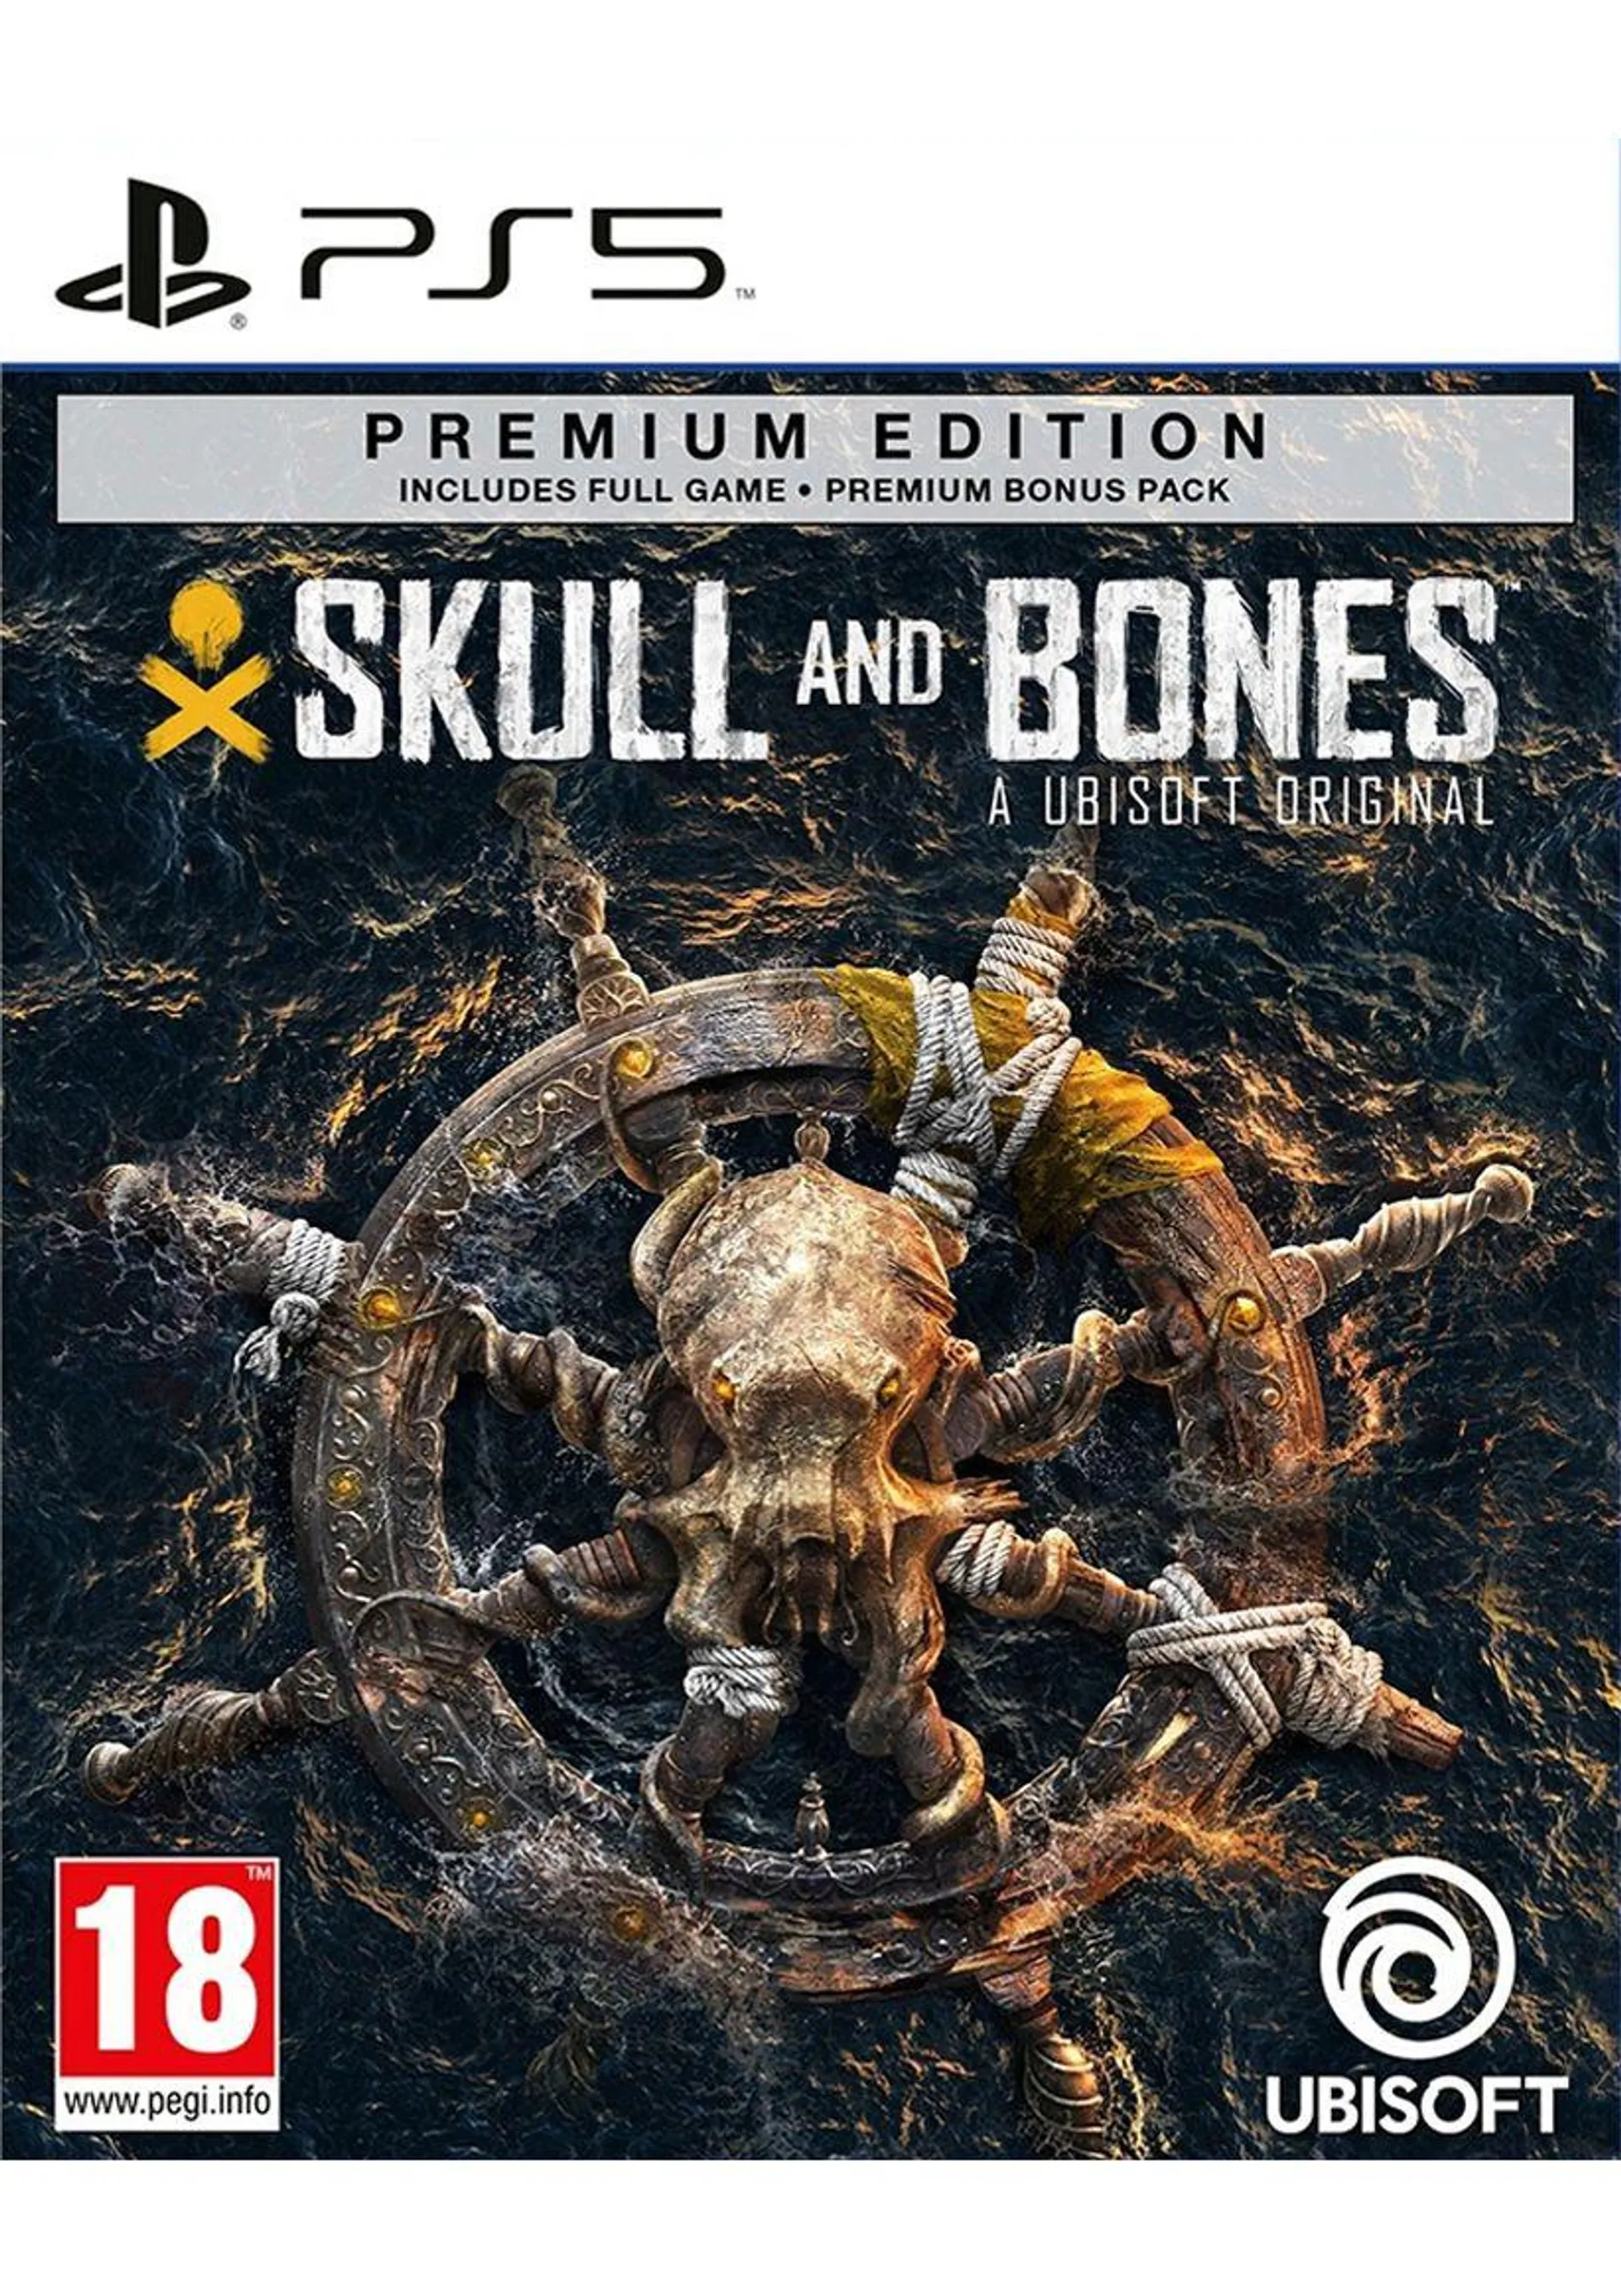 Skull And Bones - Premium Edition on PlayStation 5